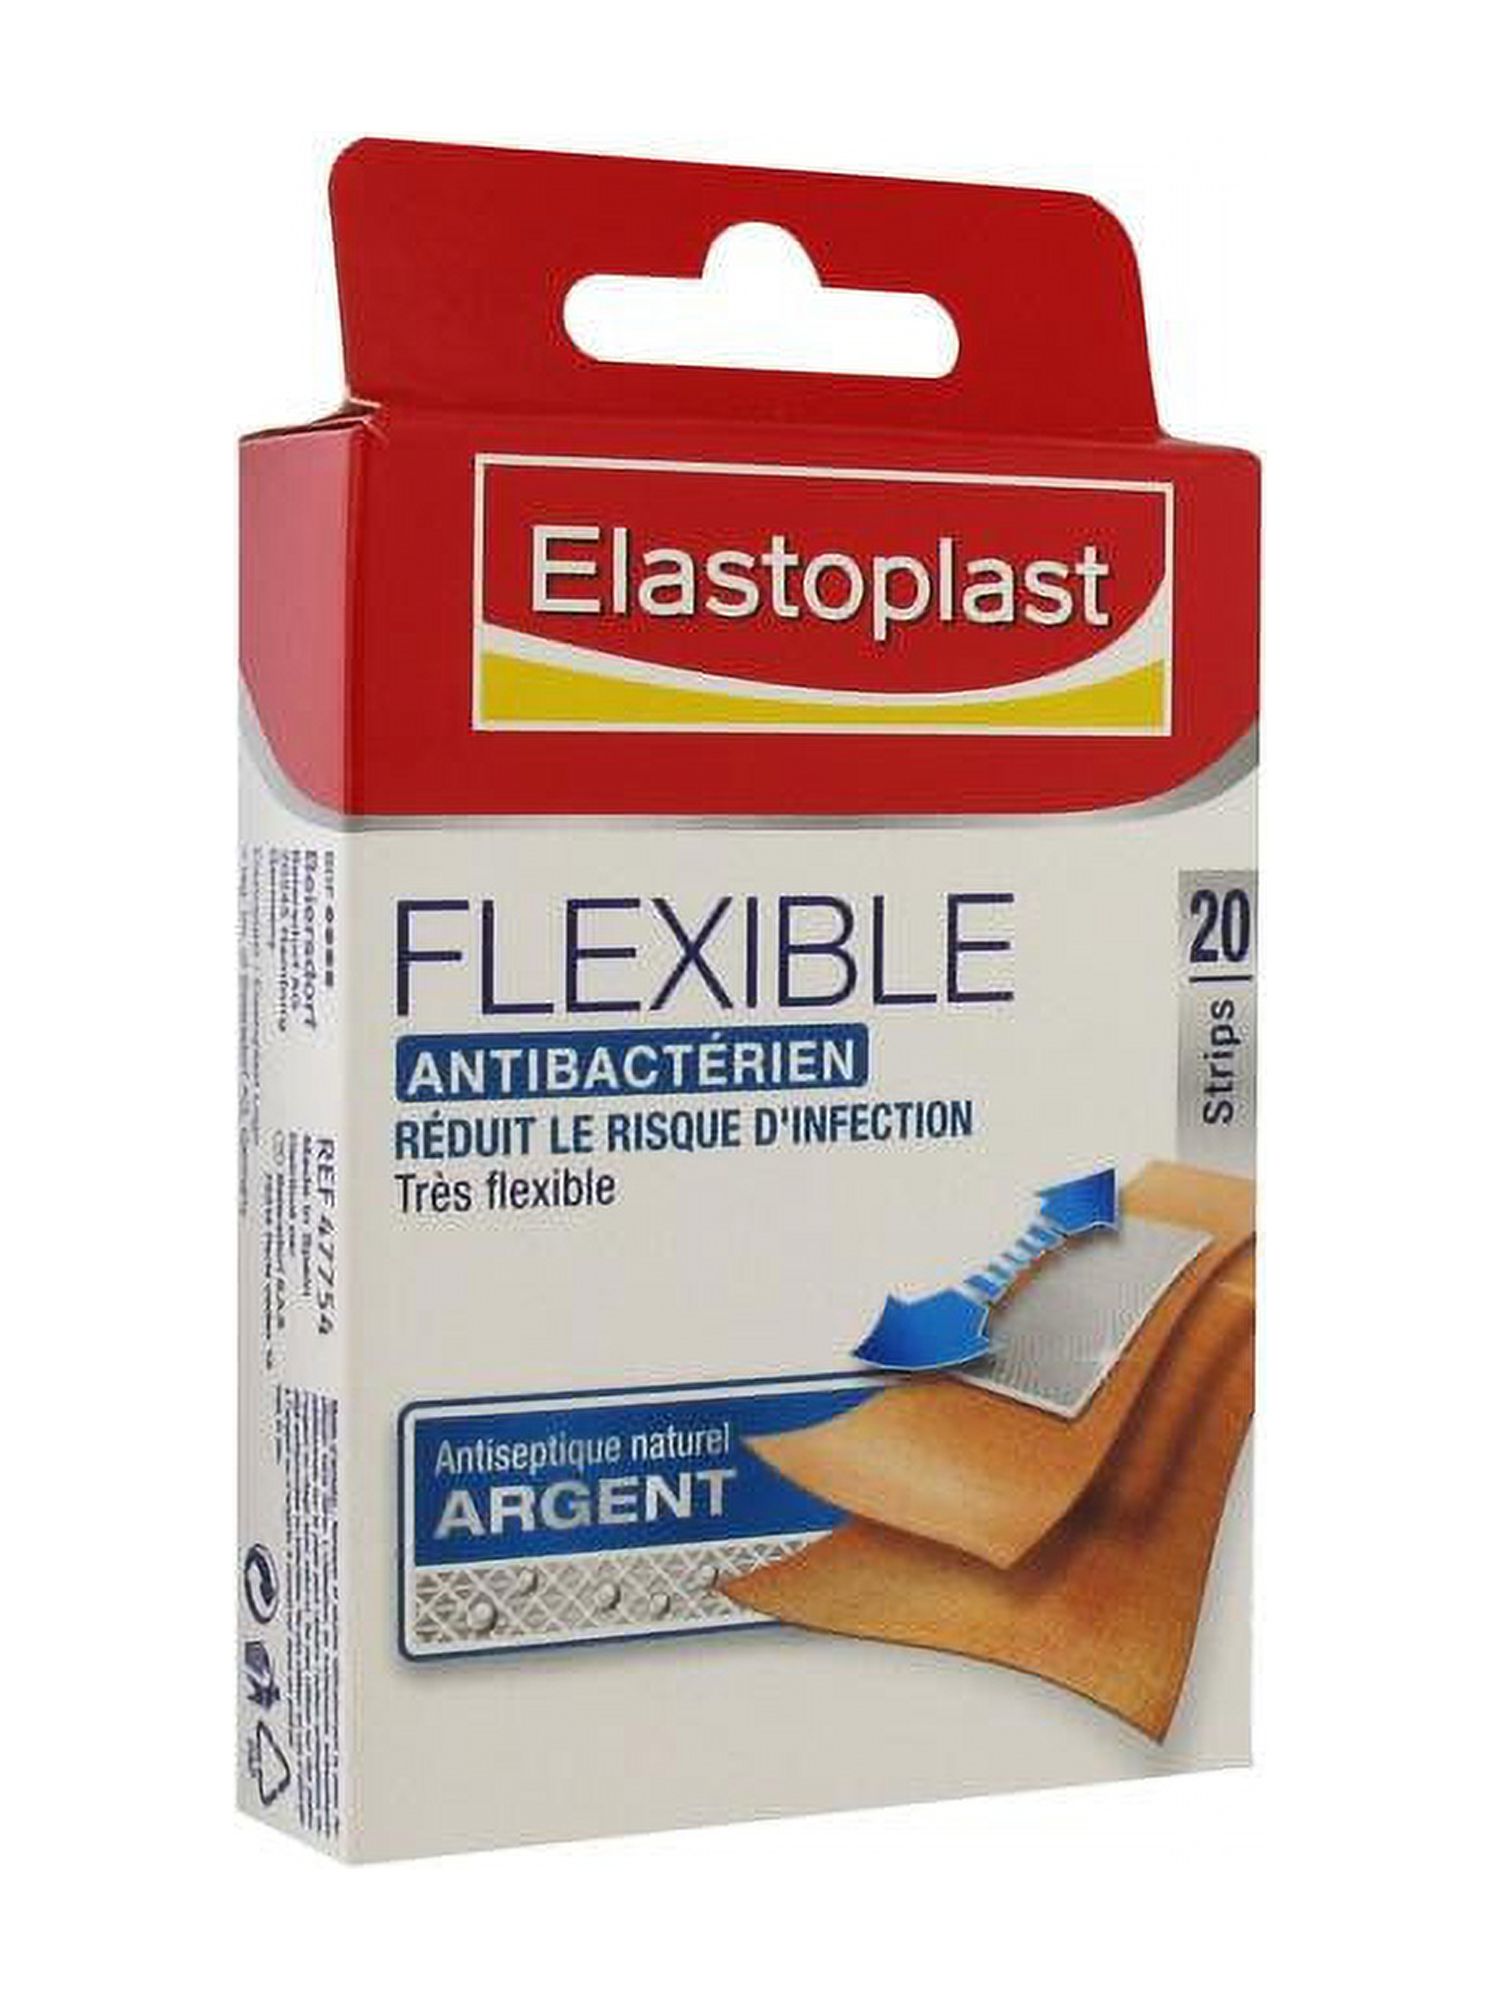 Elastoplast Flexible Sticking Plaster - image 1 of 1